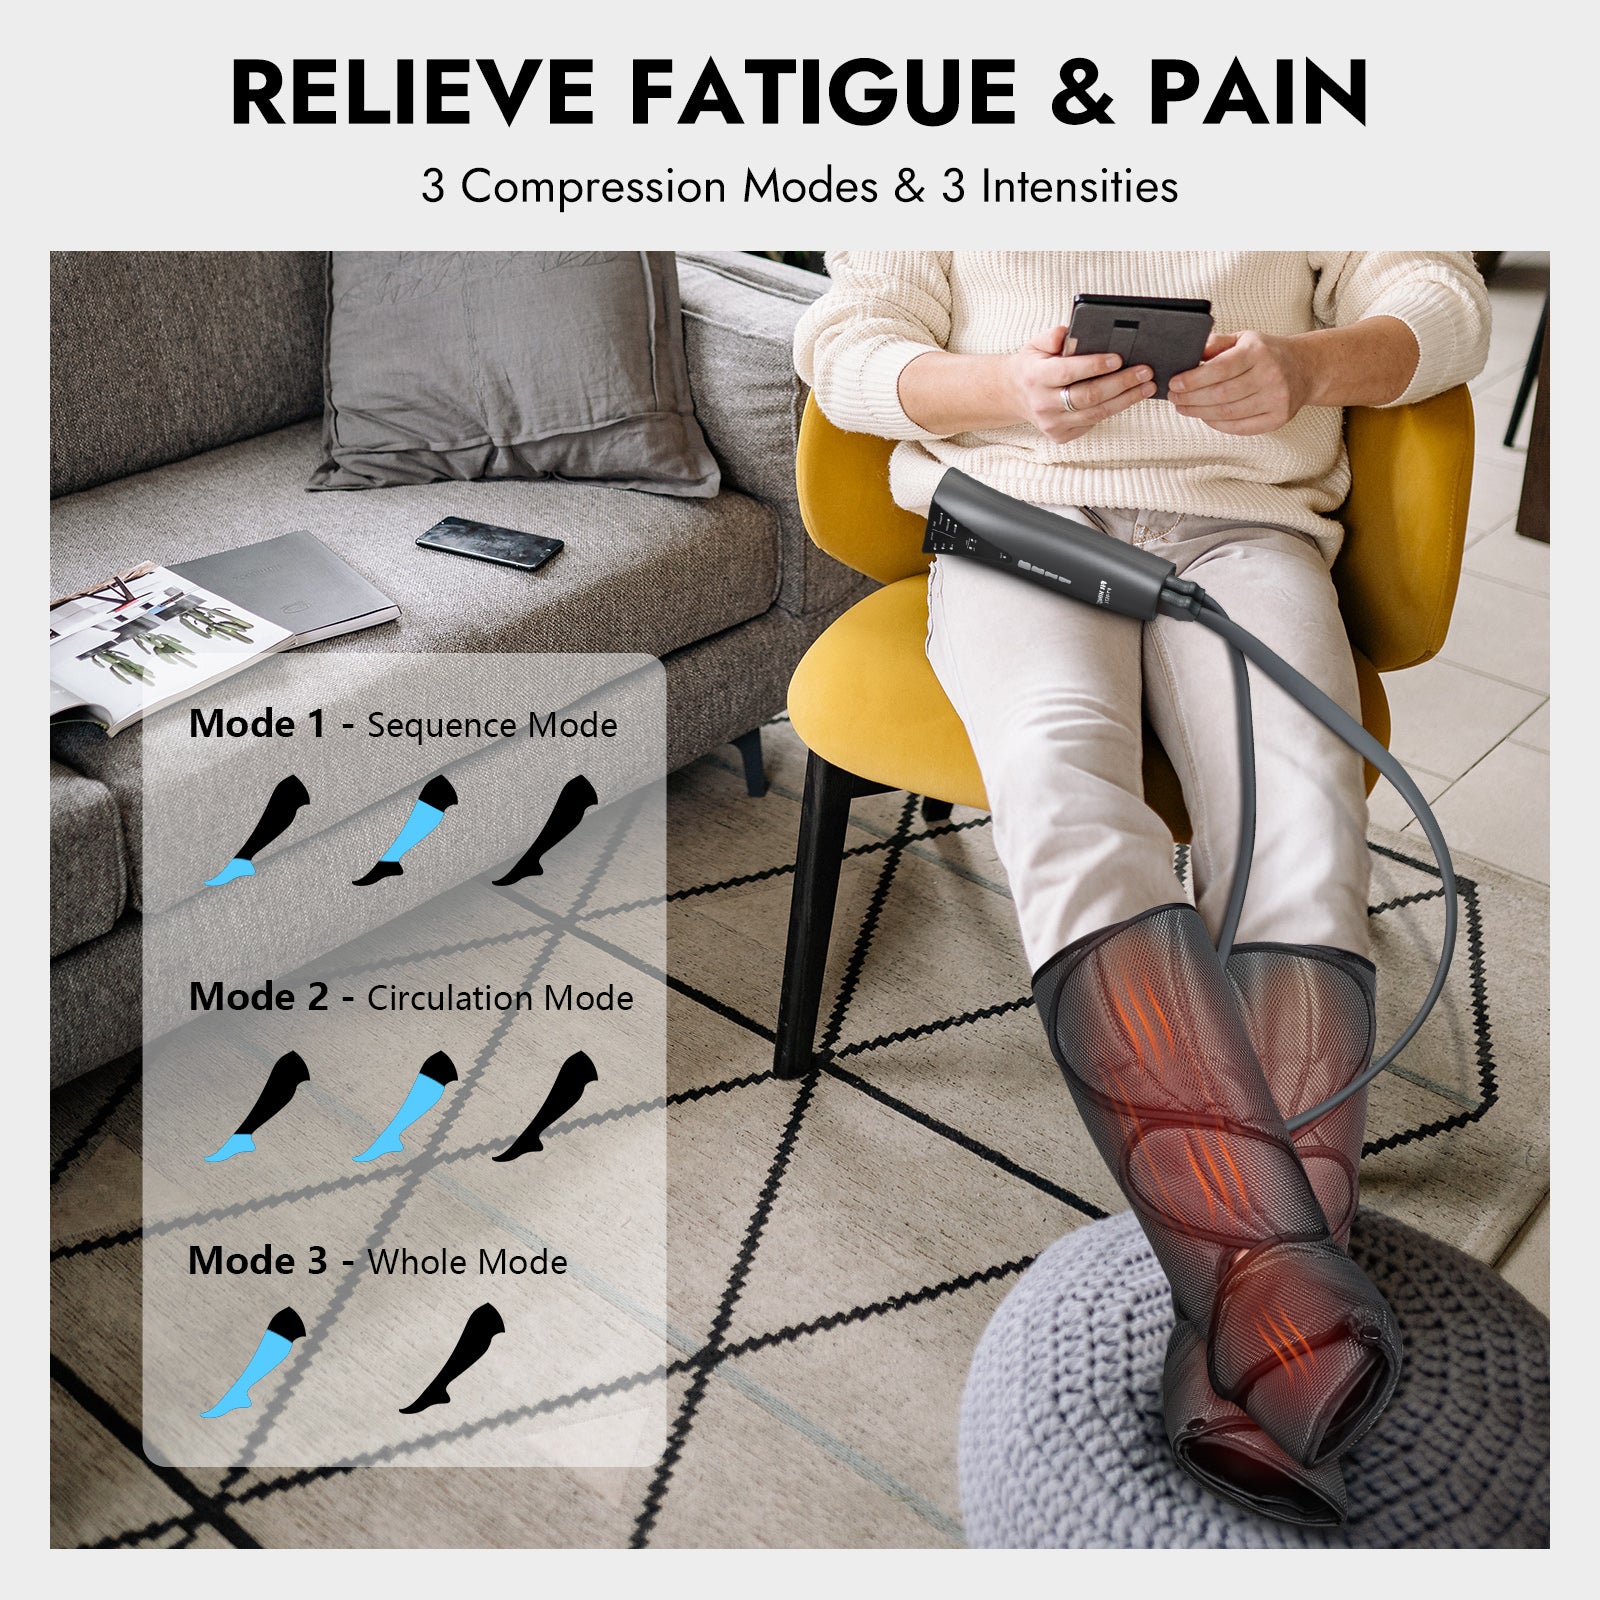 FitRx Recover Max Air Compression Leg & Foot Massager w/Heat